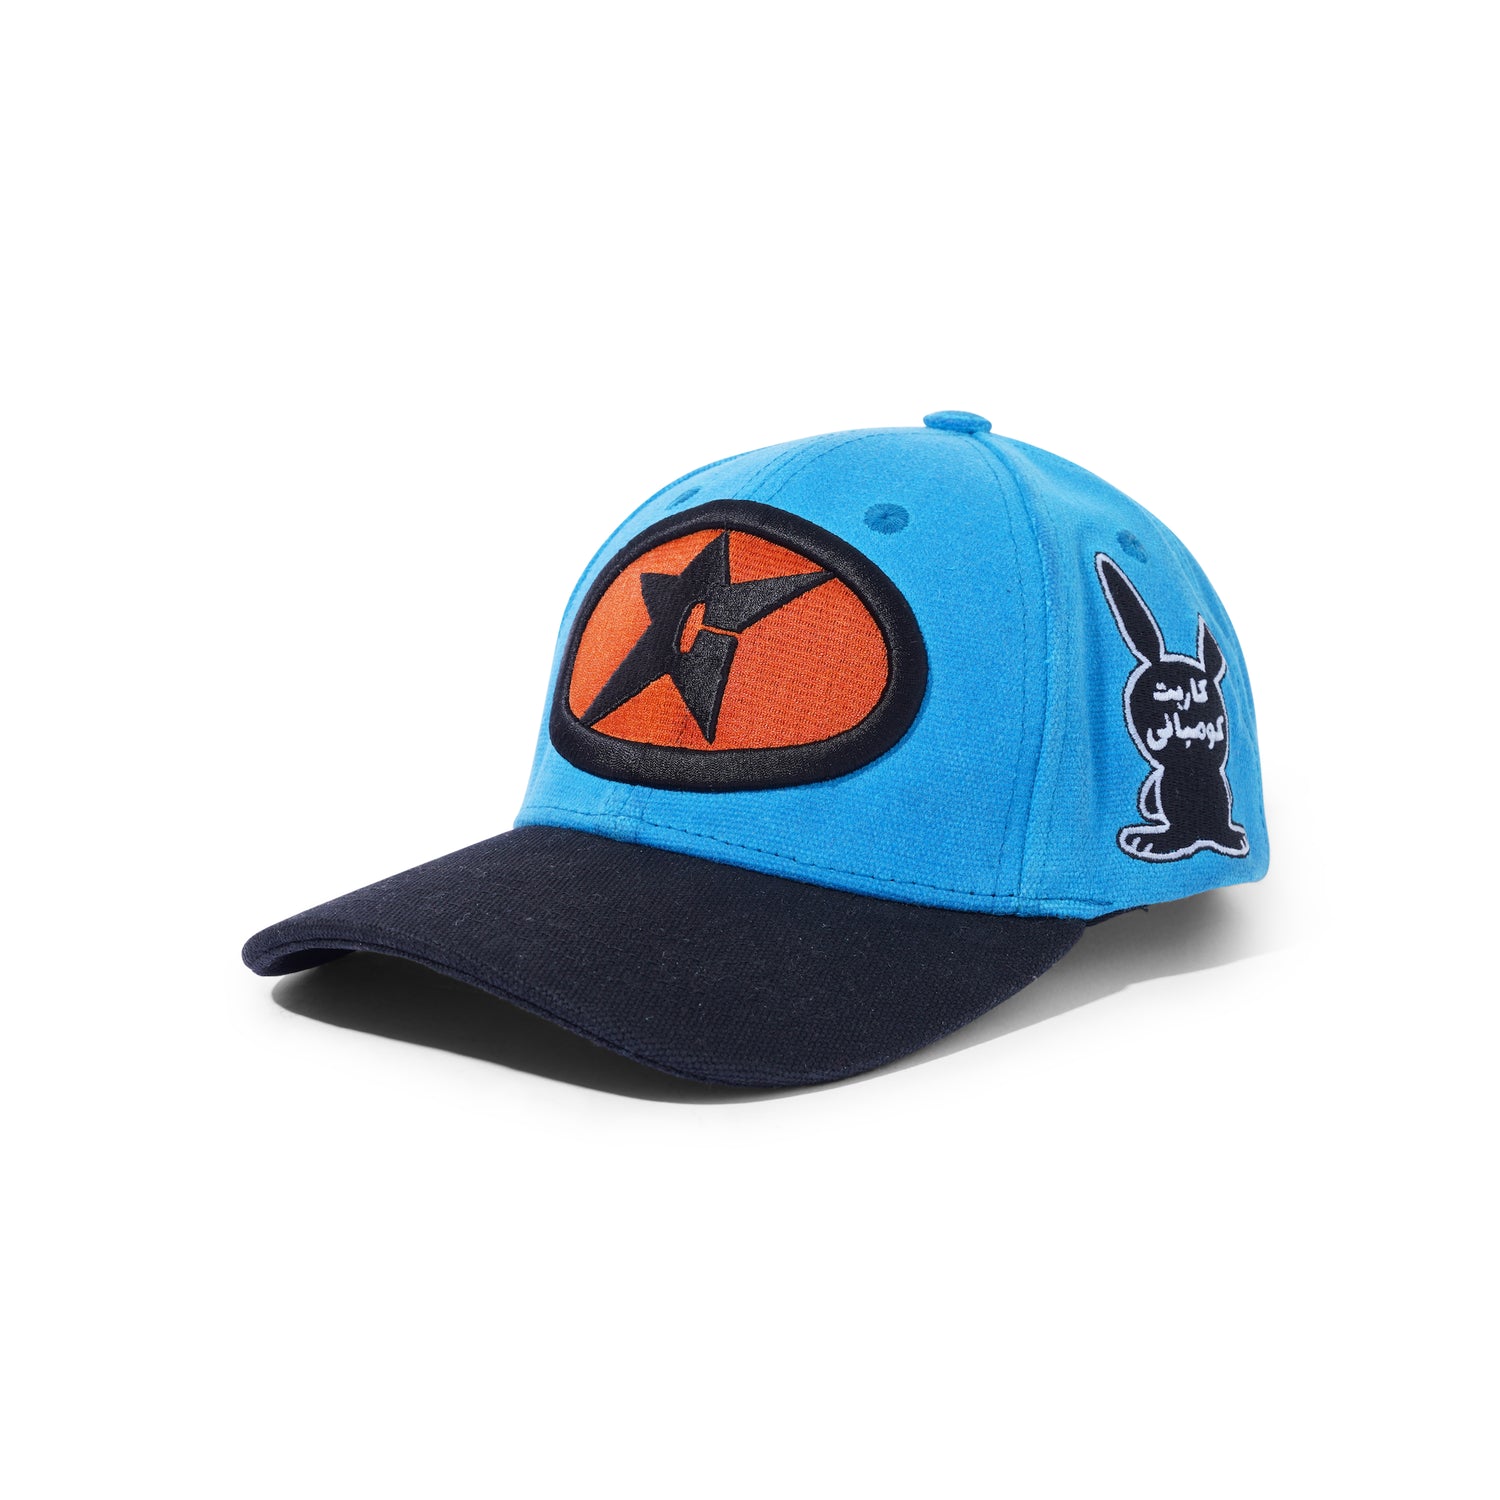 Racing Hat, Blue